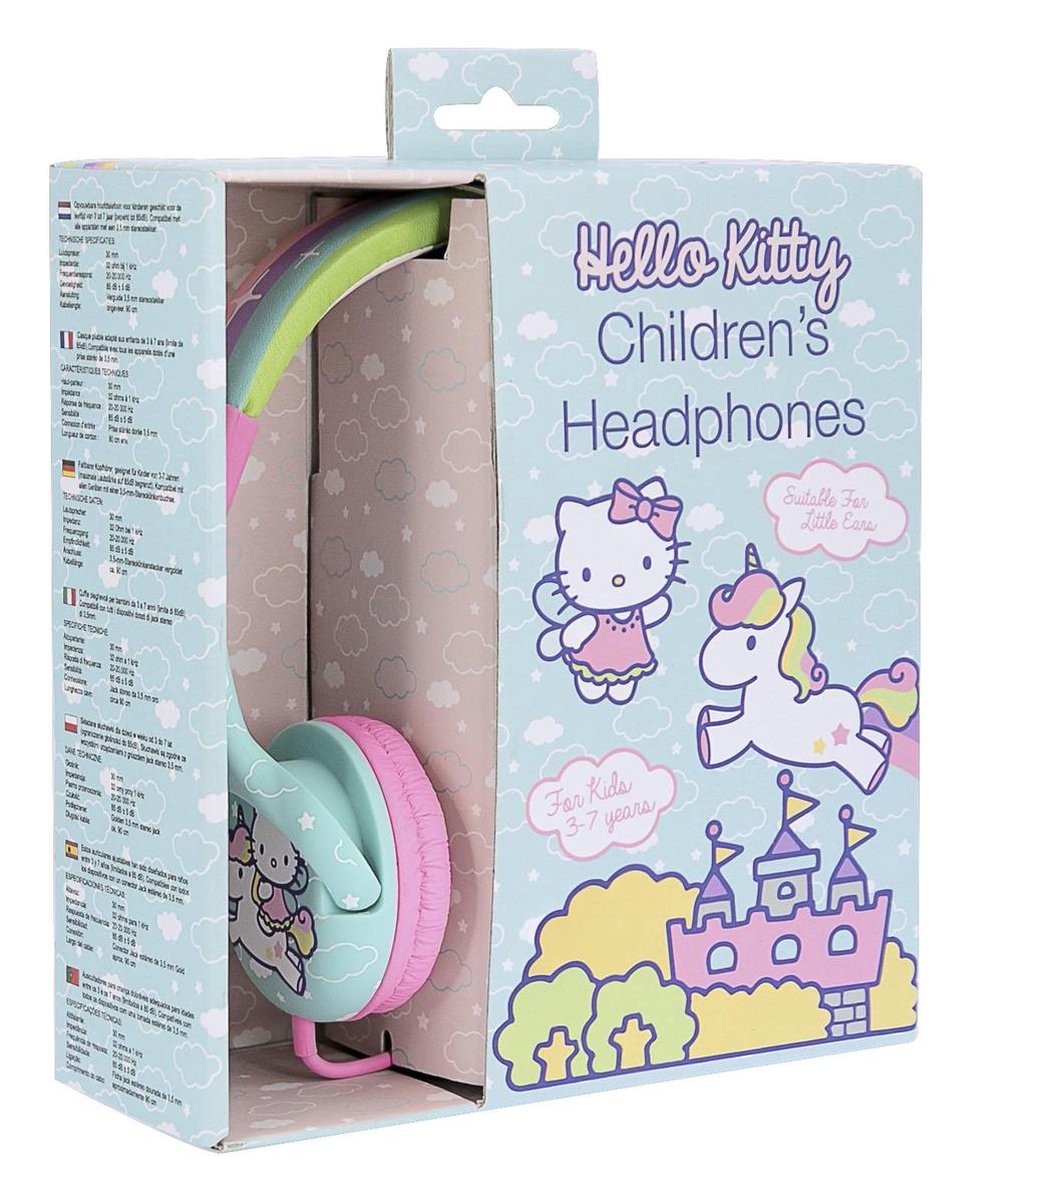 OTL Bandeau écouteurs Hello Kitty 3.5mm